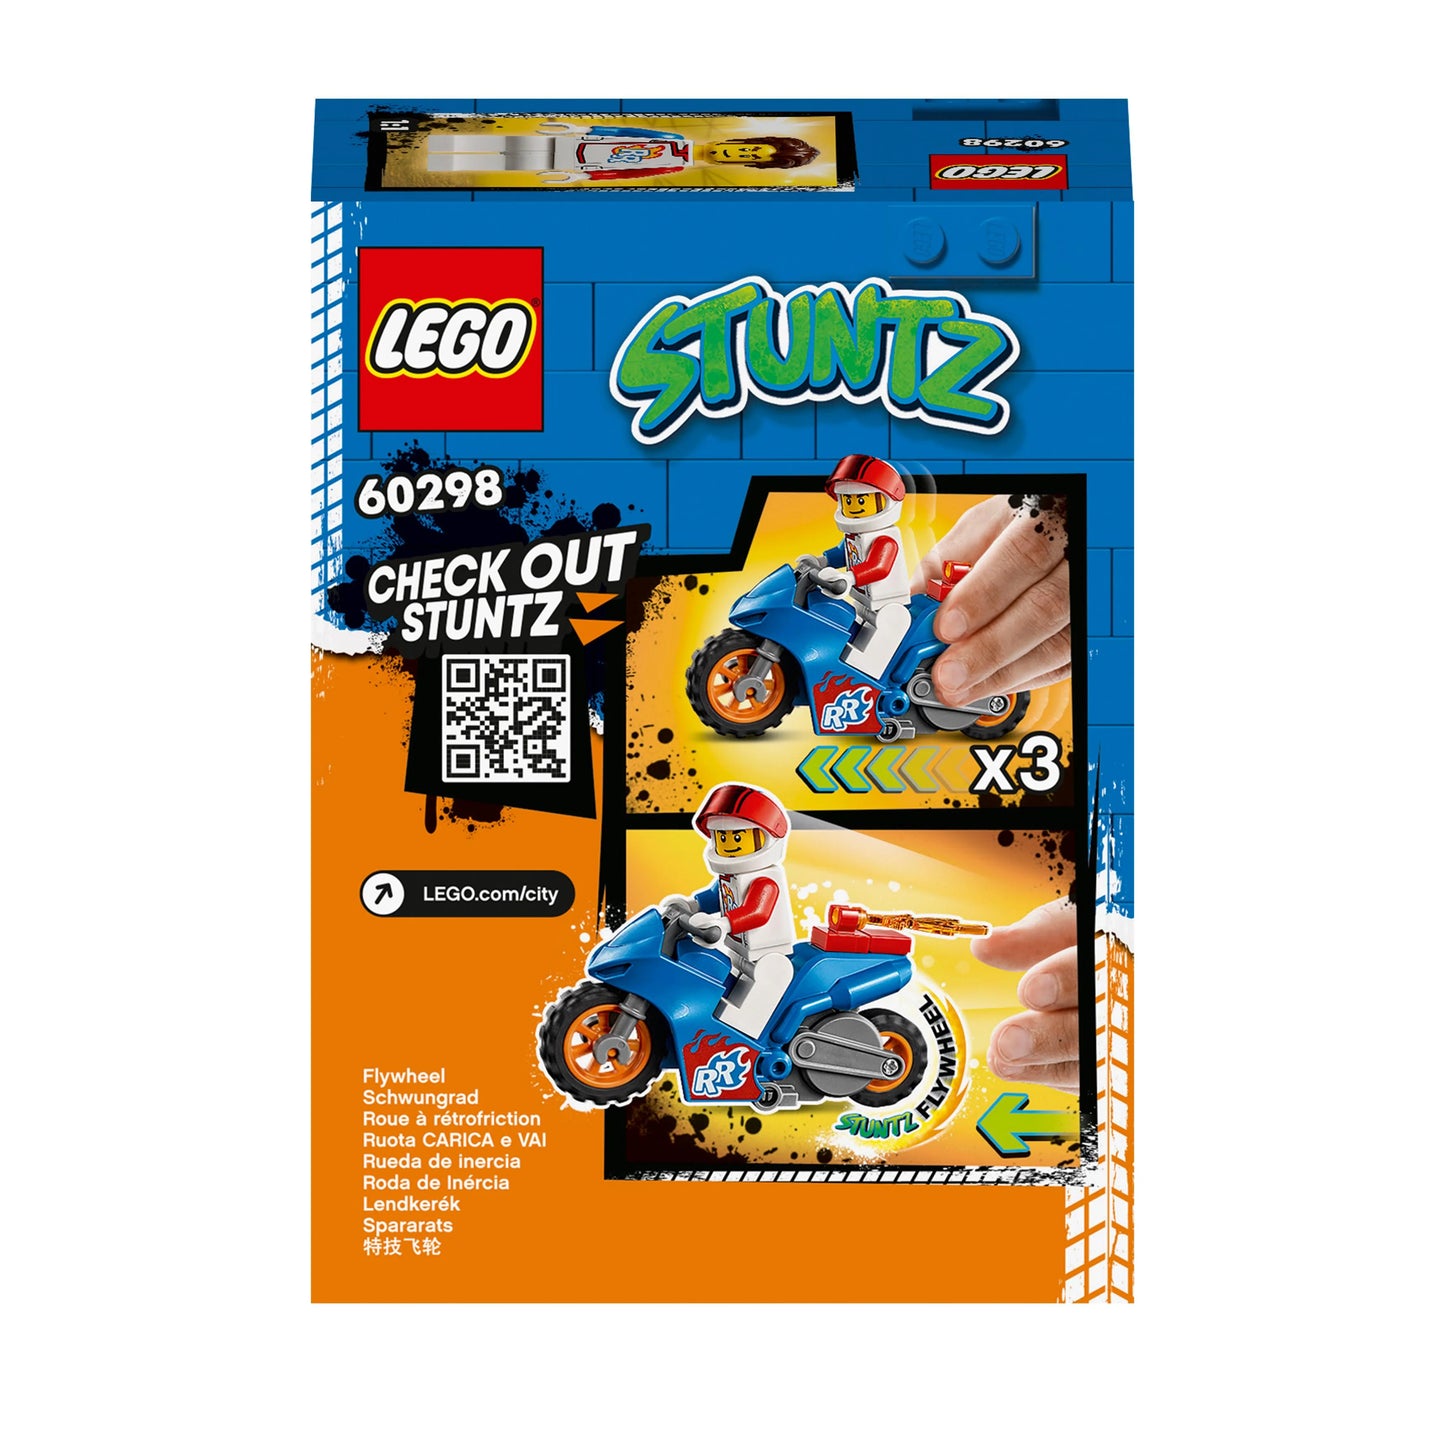 Rocket Stunt Bike - LEGO City